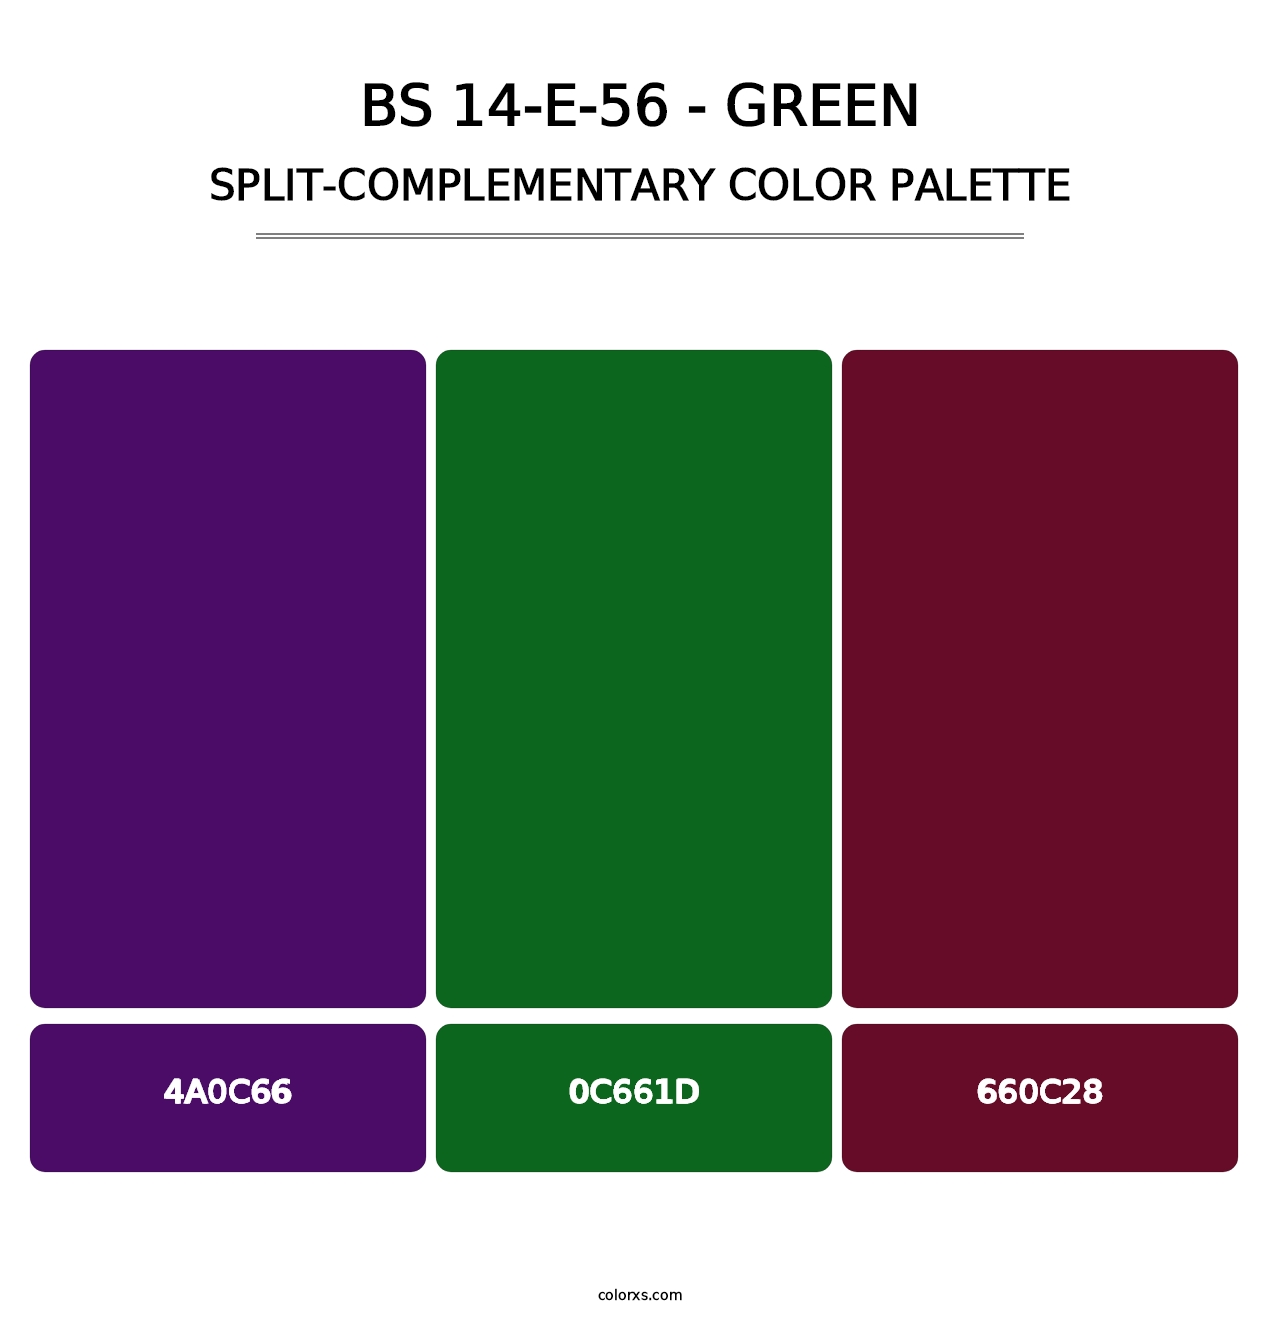 BS 14-E-56 - Green - Split-Complementary Color Palette